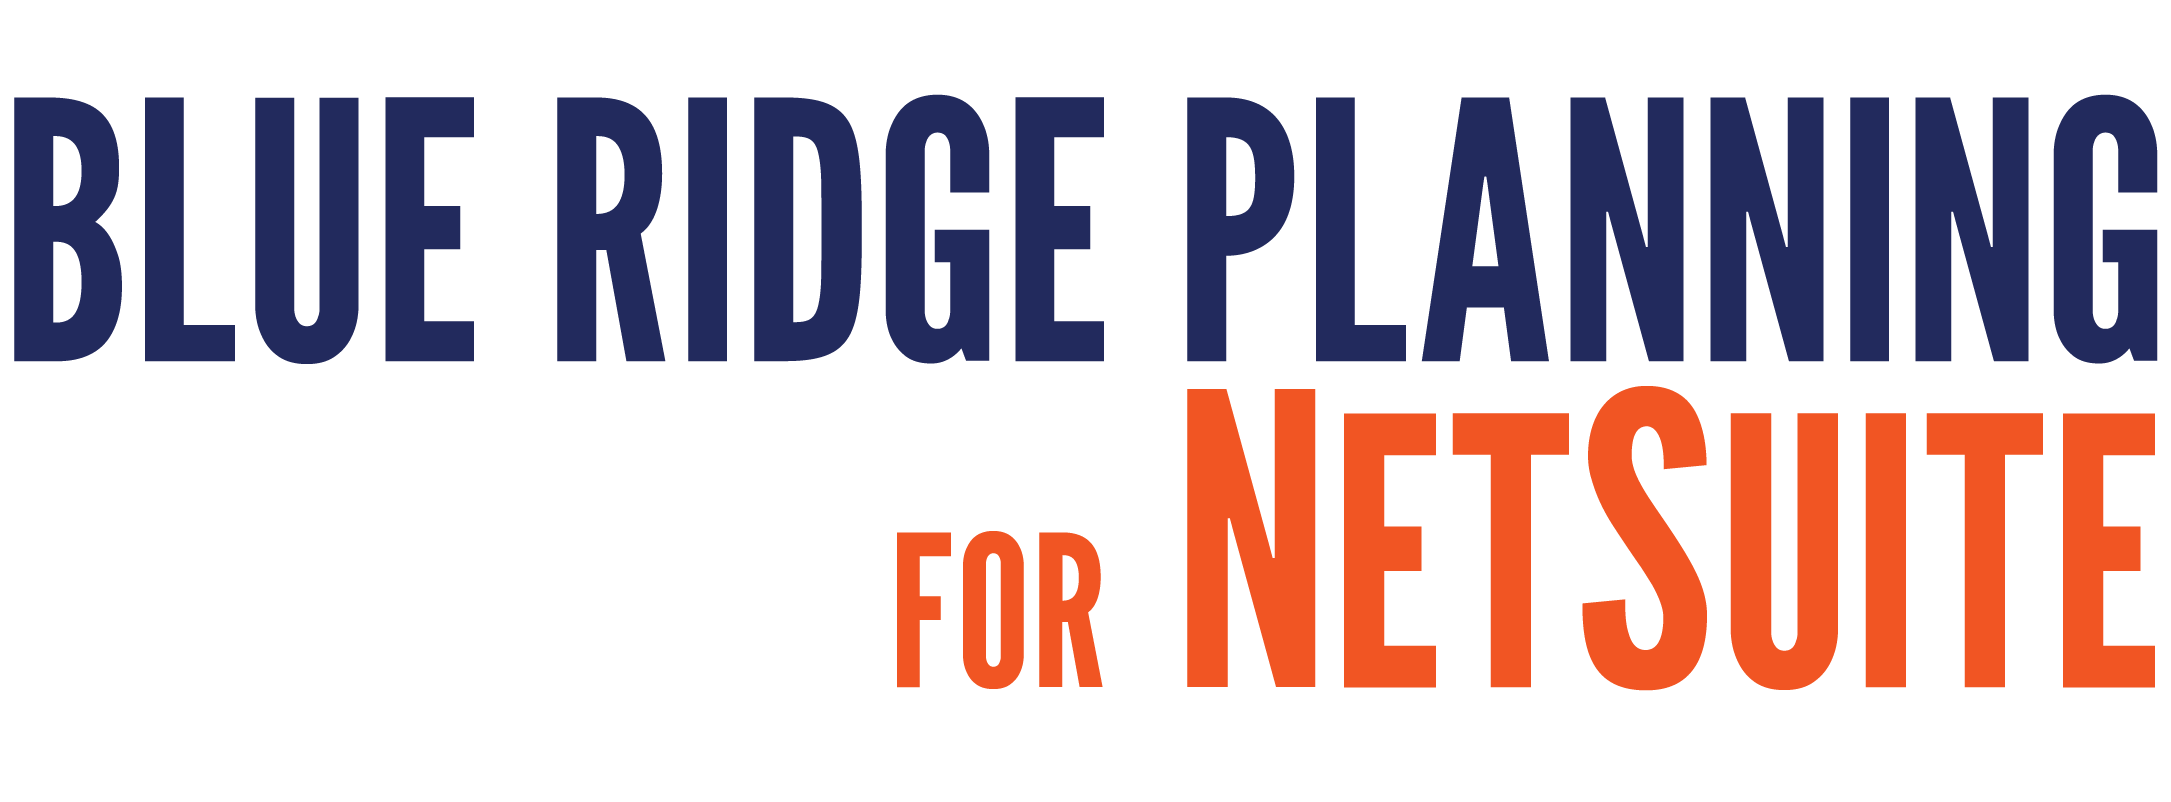 Blue Ridge Planning NetSuite